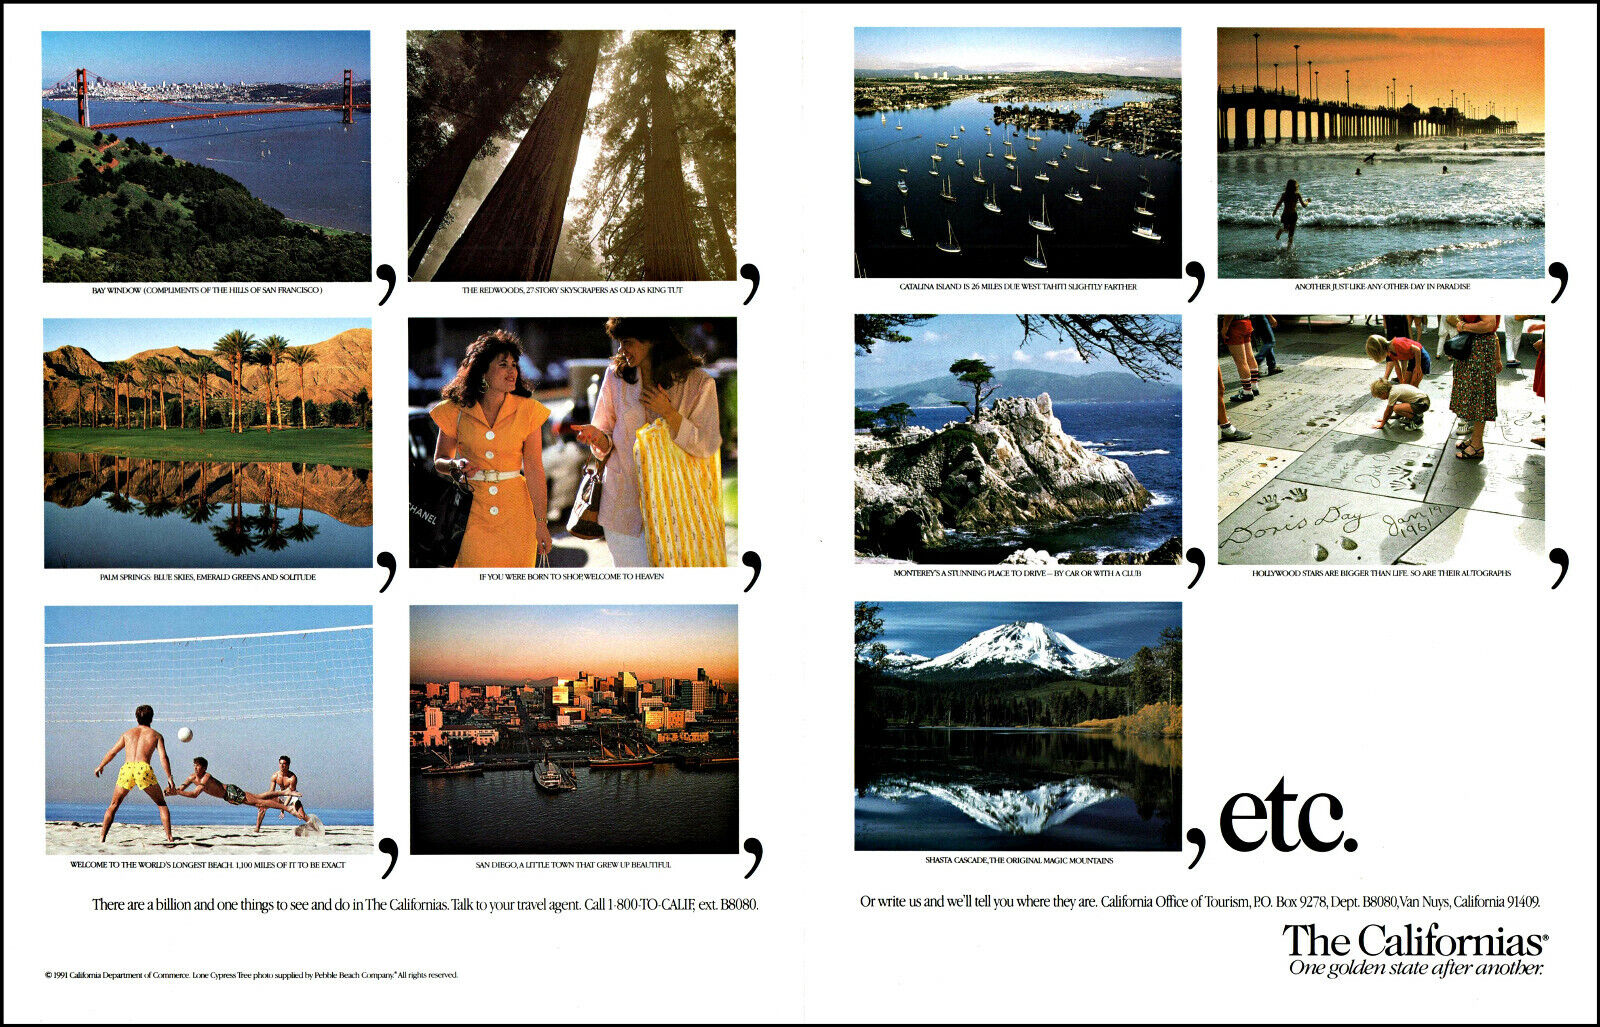 1991 The Californias California office of Tourism retro 11 photo print ad ads81